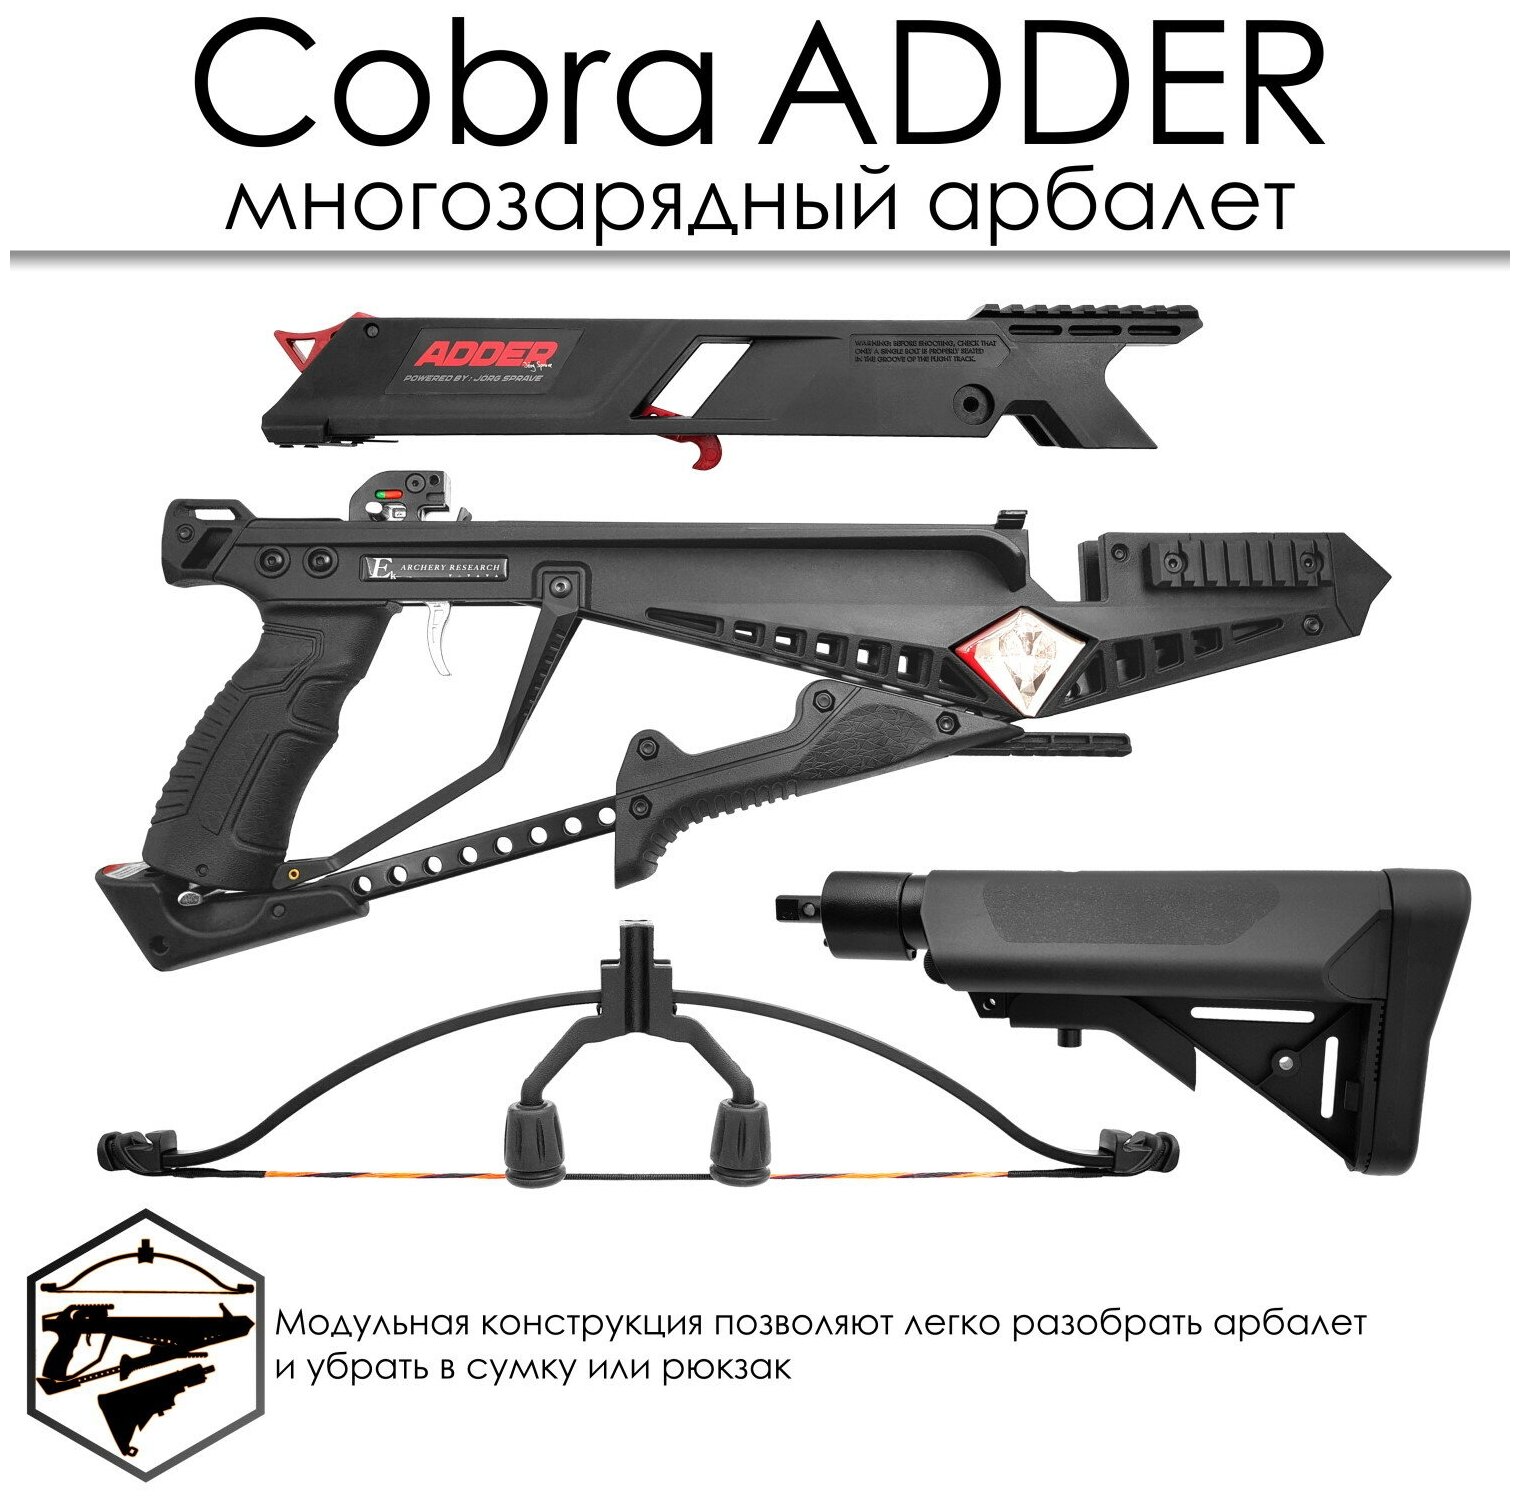 Арбалет Ek Cobra System RX ADDER многозарядный